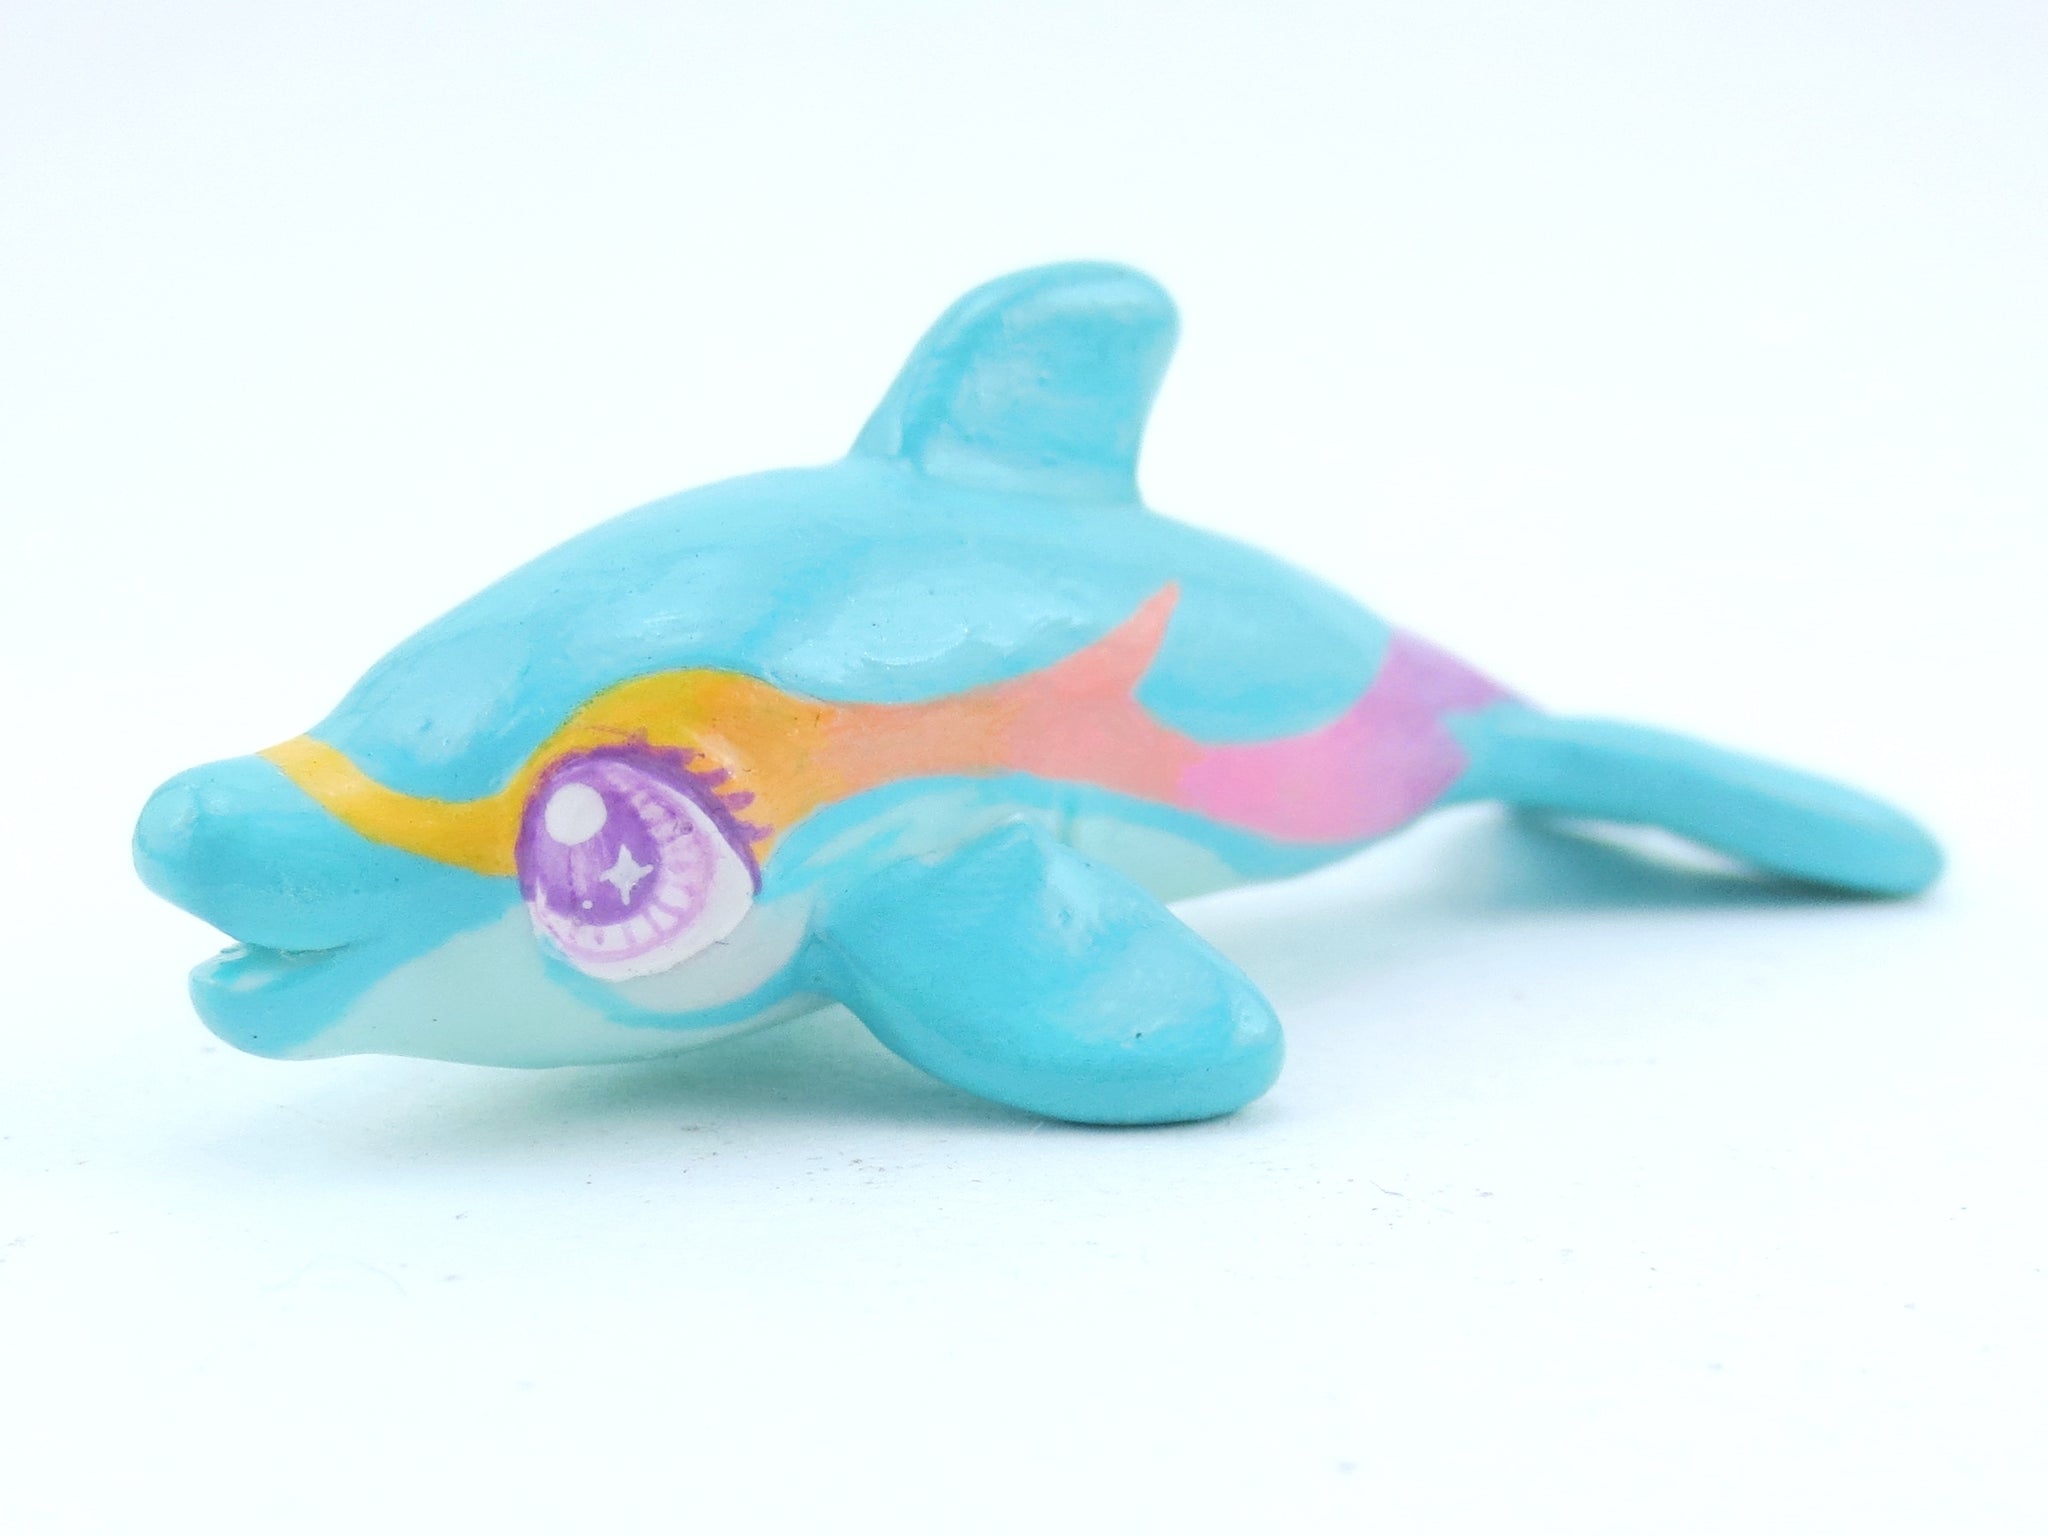 Turquoise Rainbow Stripe Dolphin Figurine - Polymer Clay Kawaii Animals